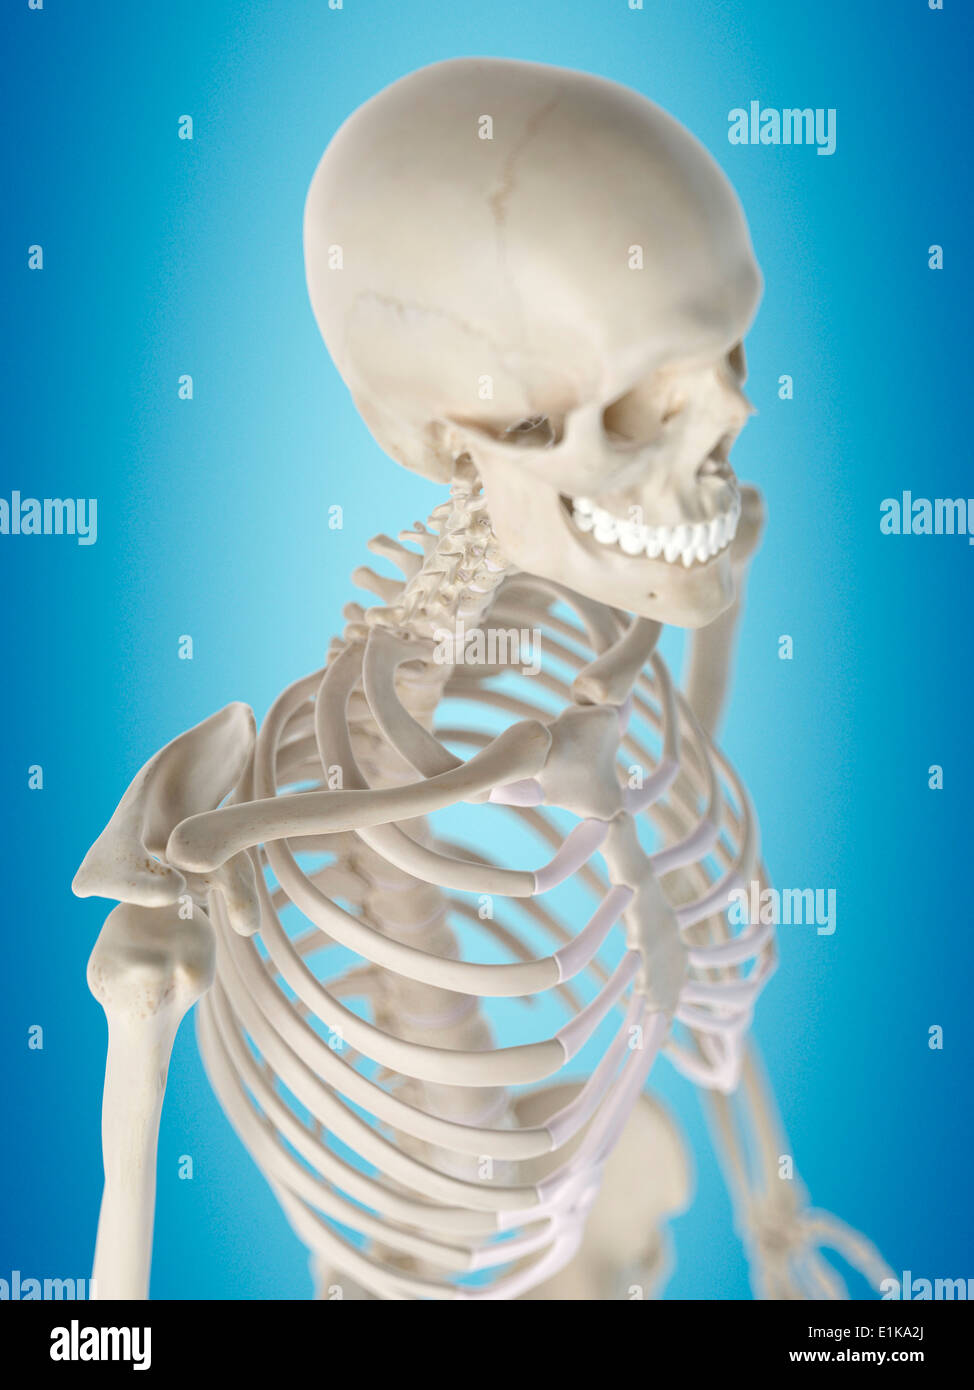 Human thorax anatomy computer artwork. Stock Photo